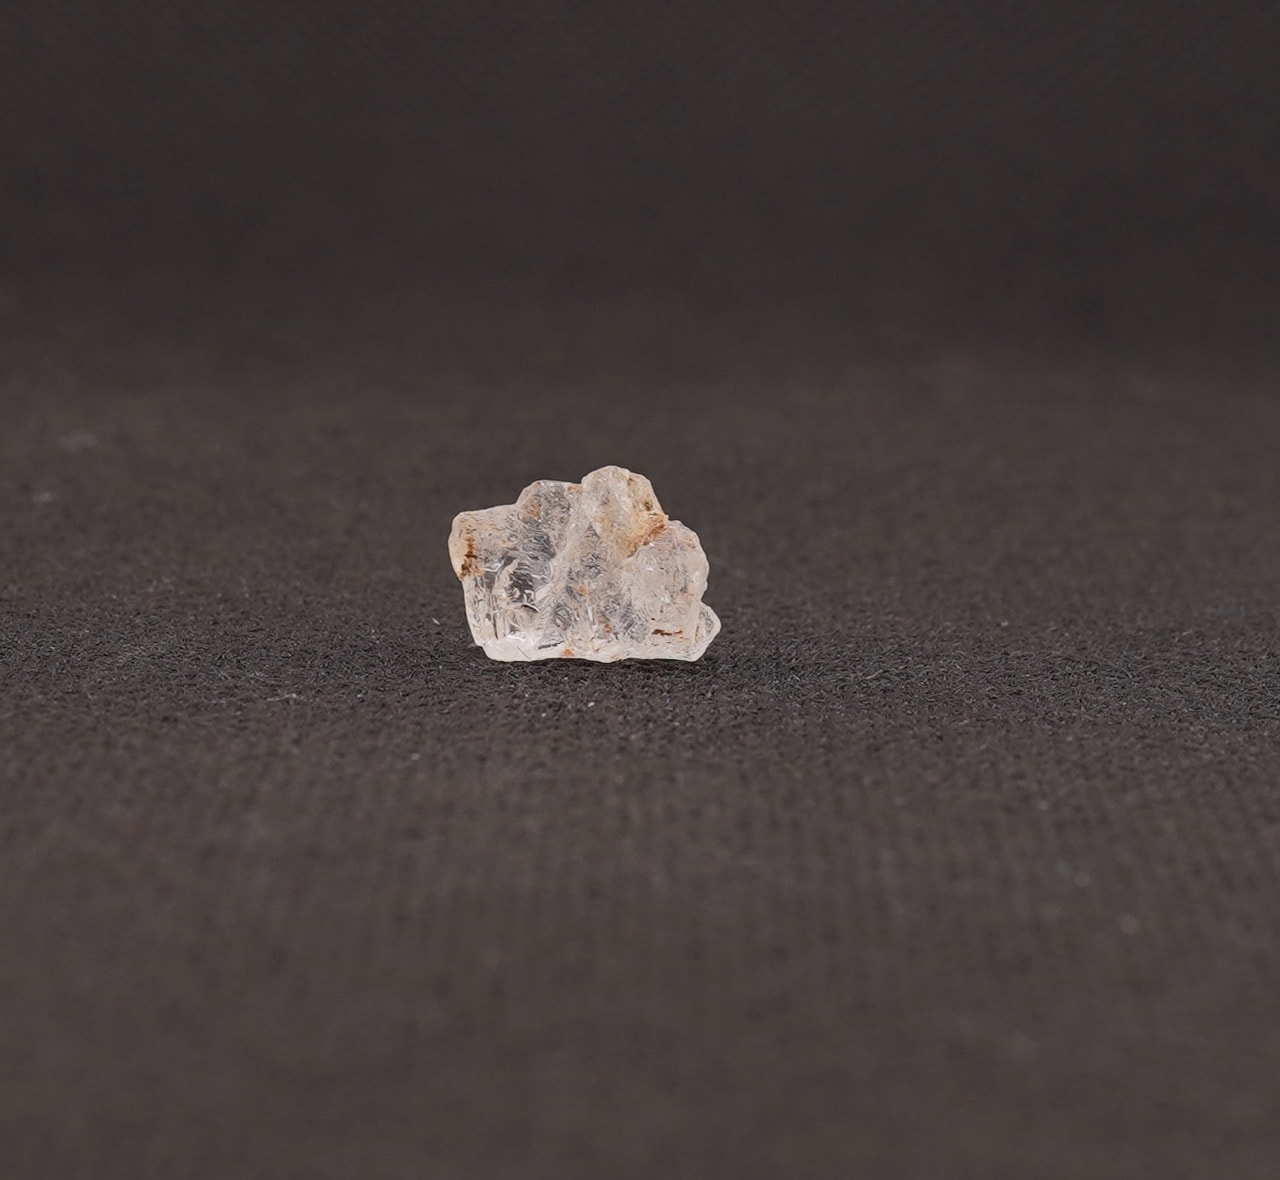 Fenacit nigerian cristal natural unicat f248